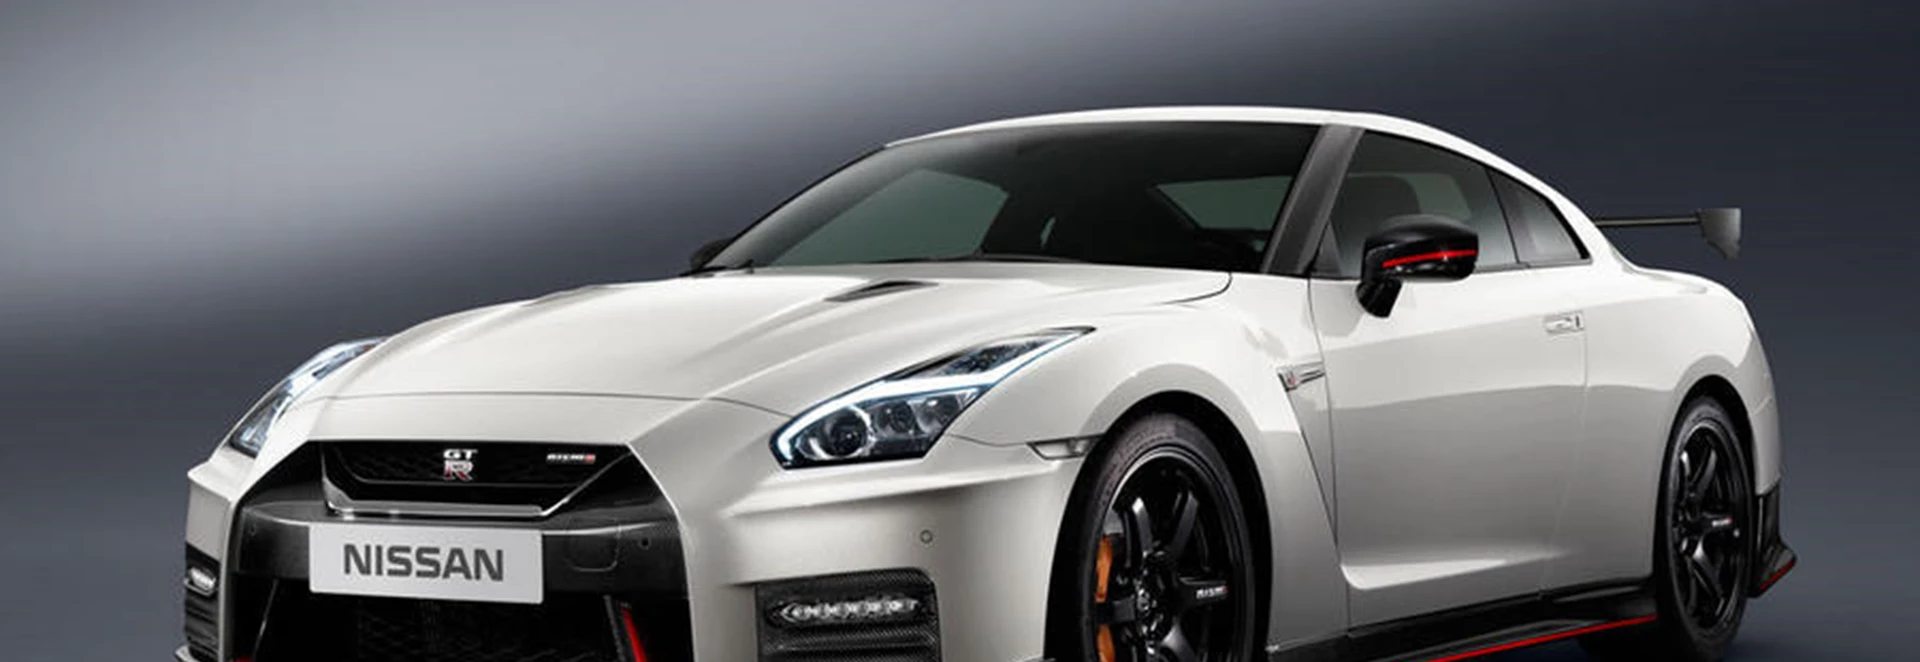 Nissan GT-R Nismo gets even sportier